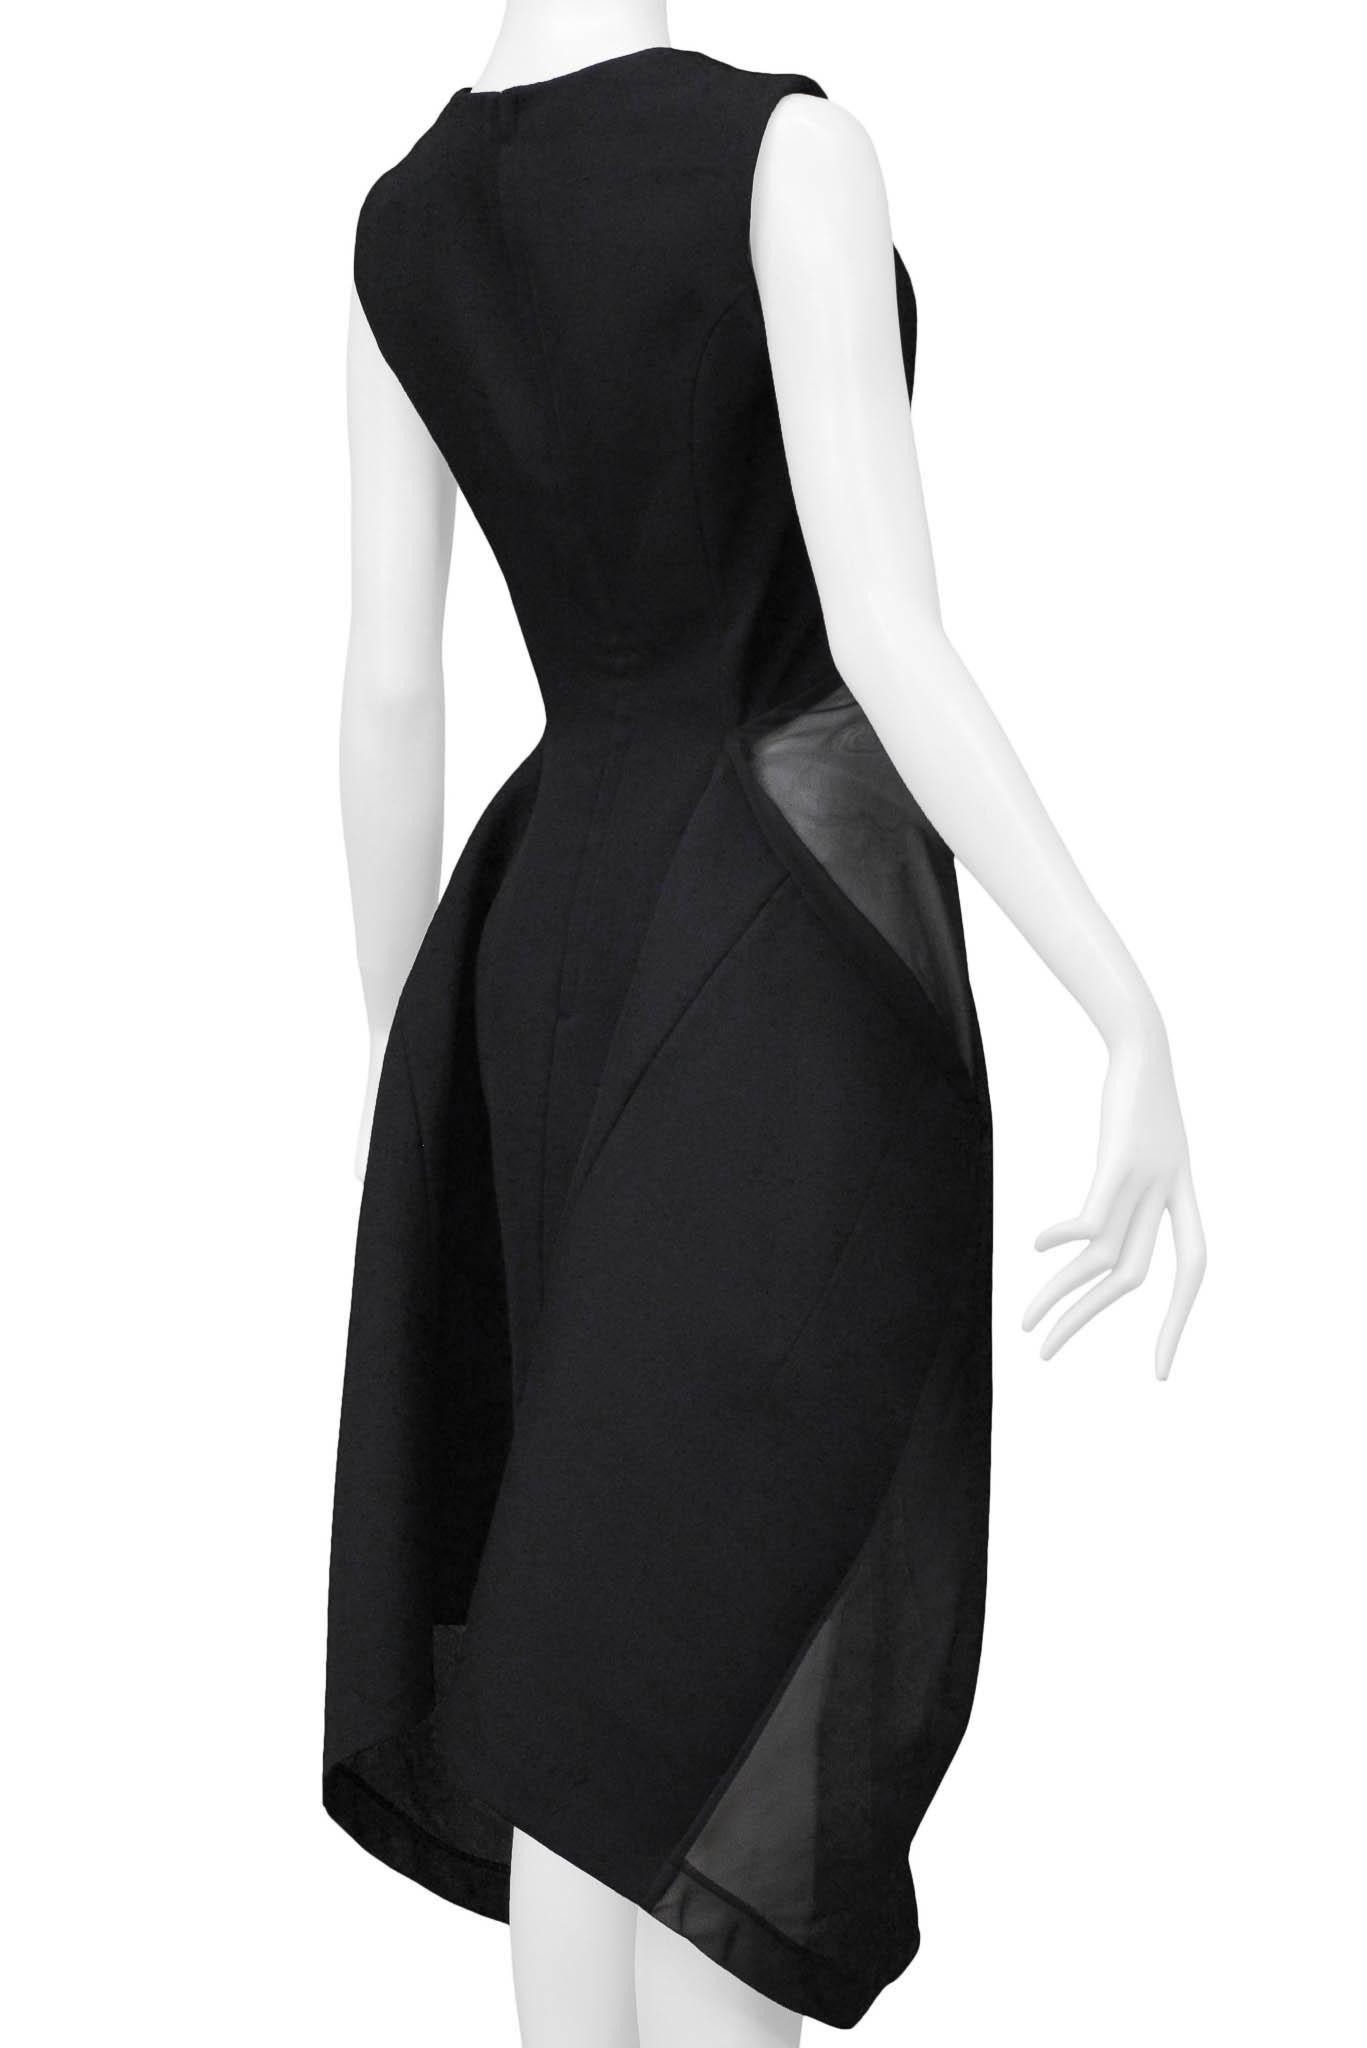 Comme Des Garcons Black Sheer Front Concept Dress 1997 For Sale 2